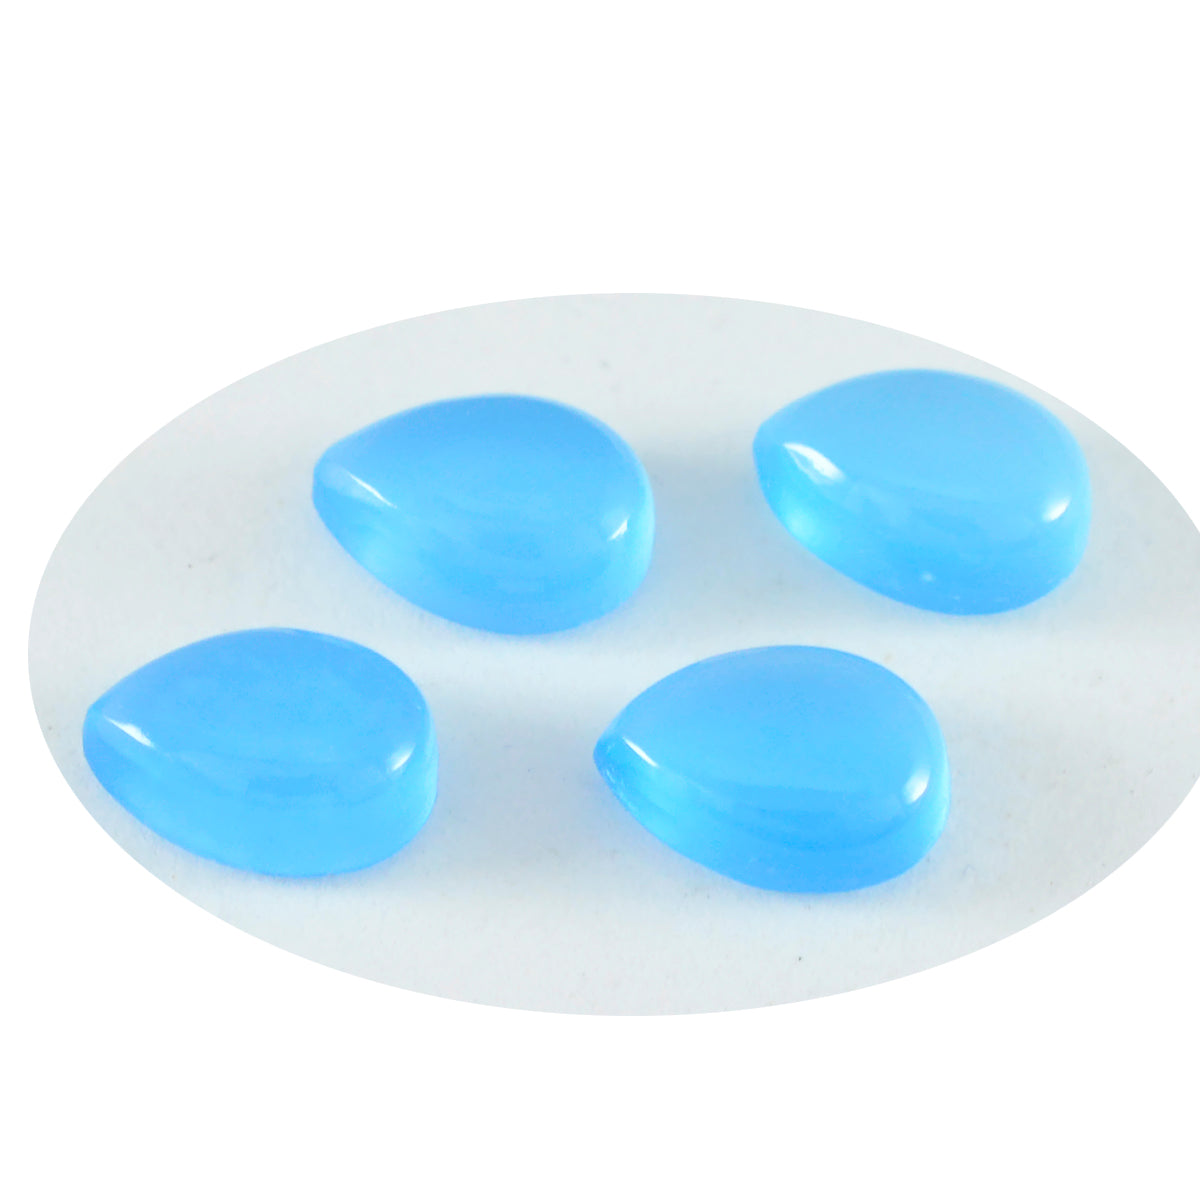 Riyogems 1 cabujón de calcedonia azul, 7x10 mm, forma de pera, piedra suelta de calidad A+